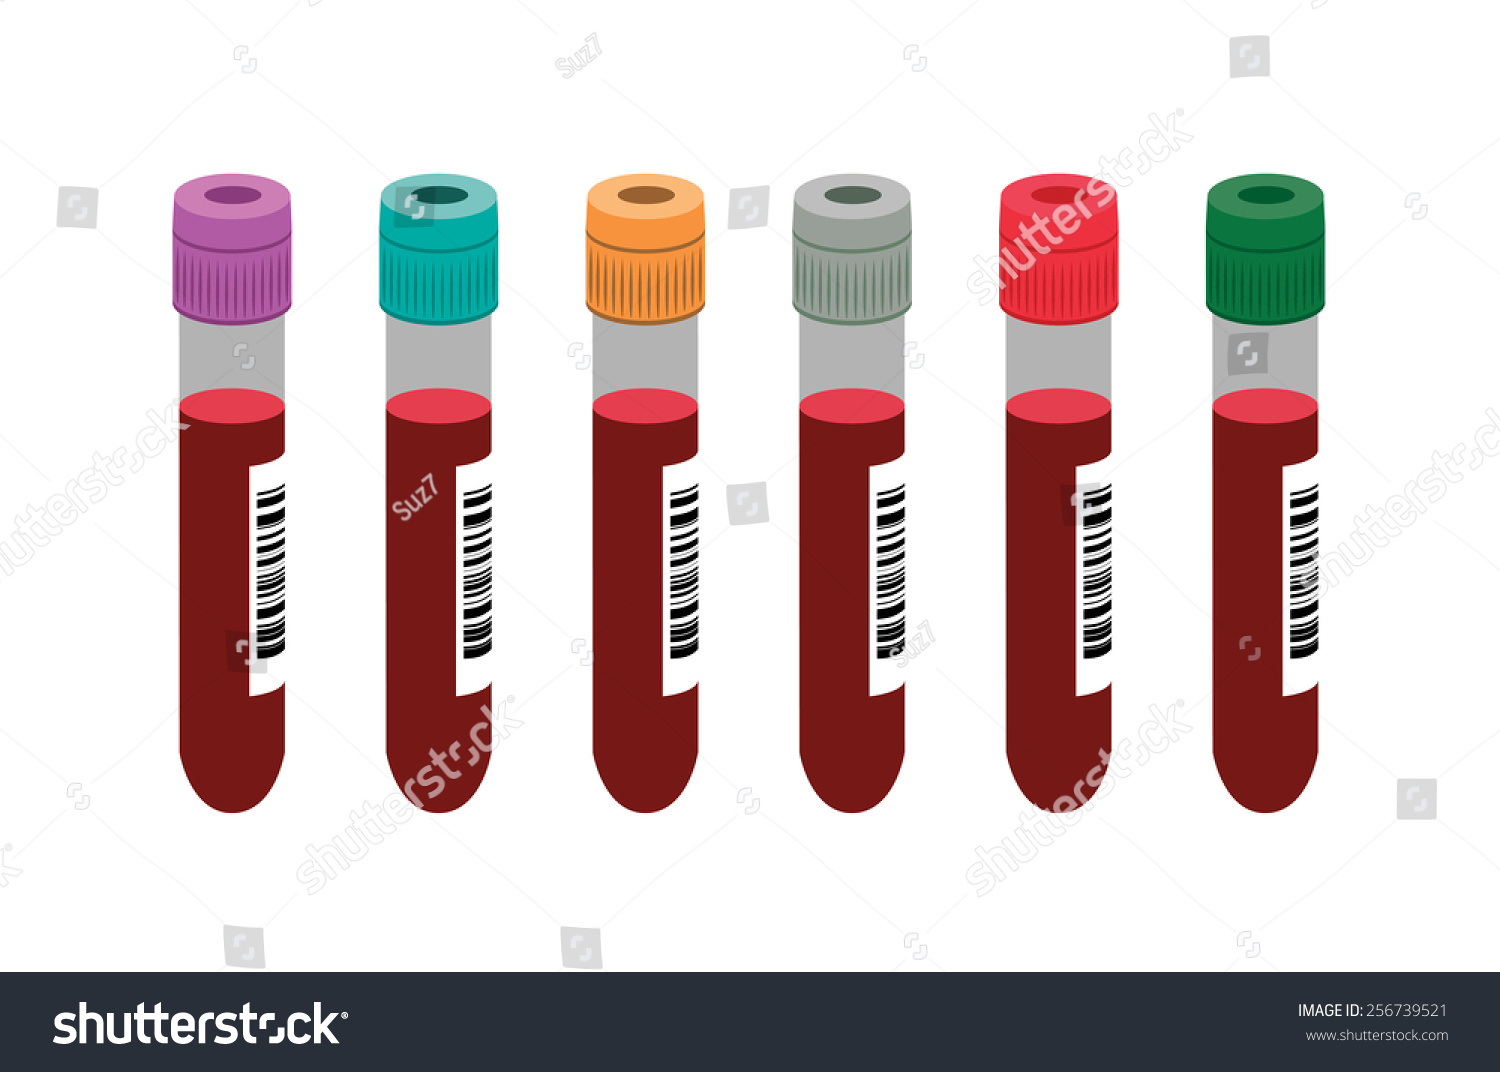 clipart blood vial - photo #2